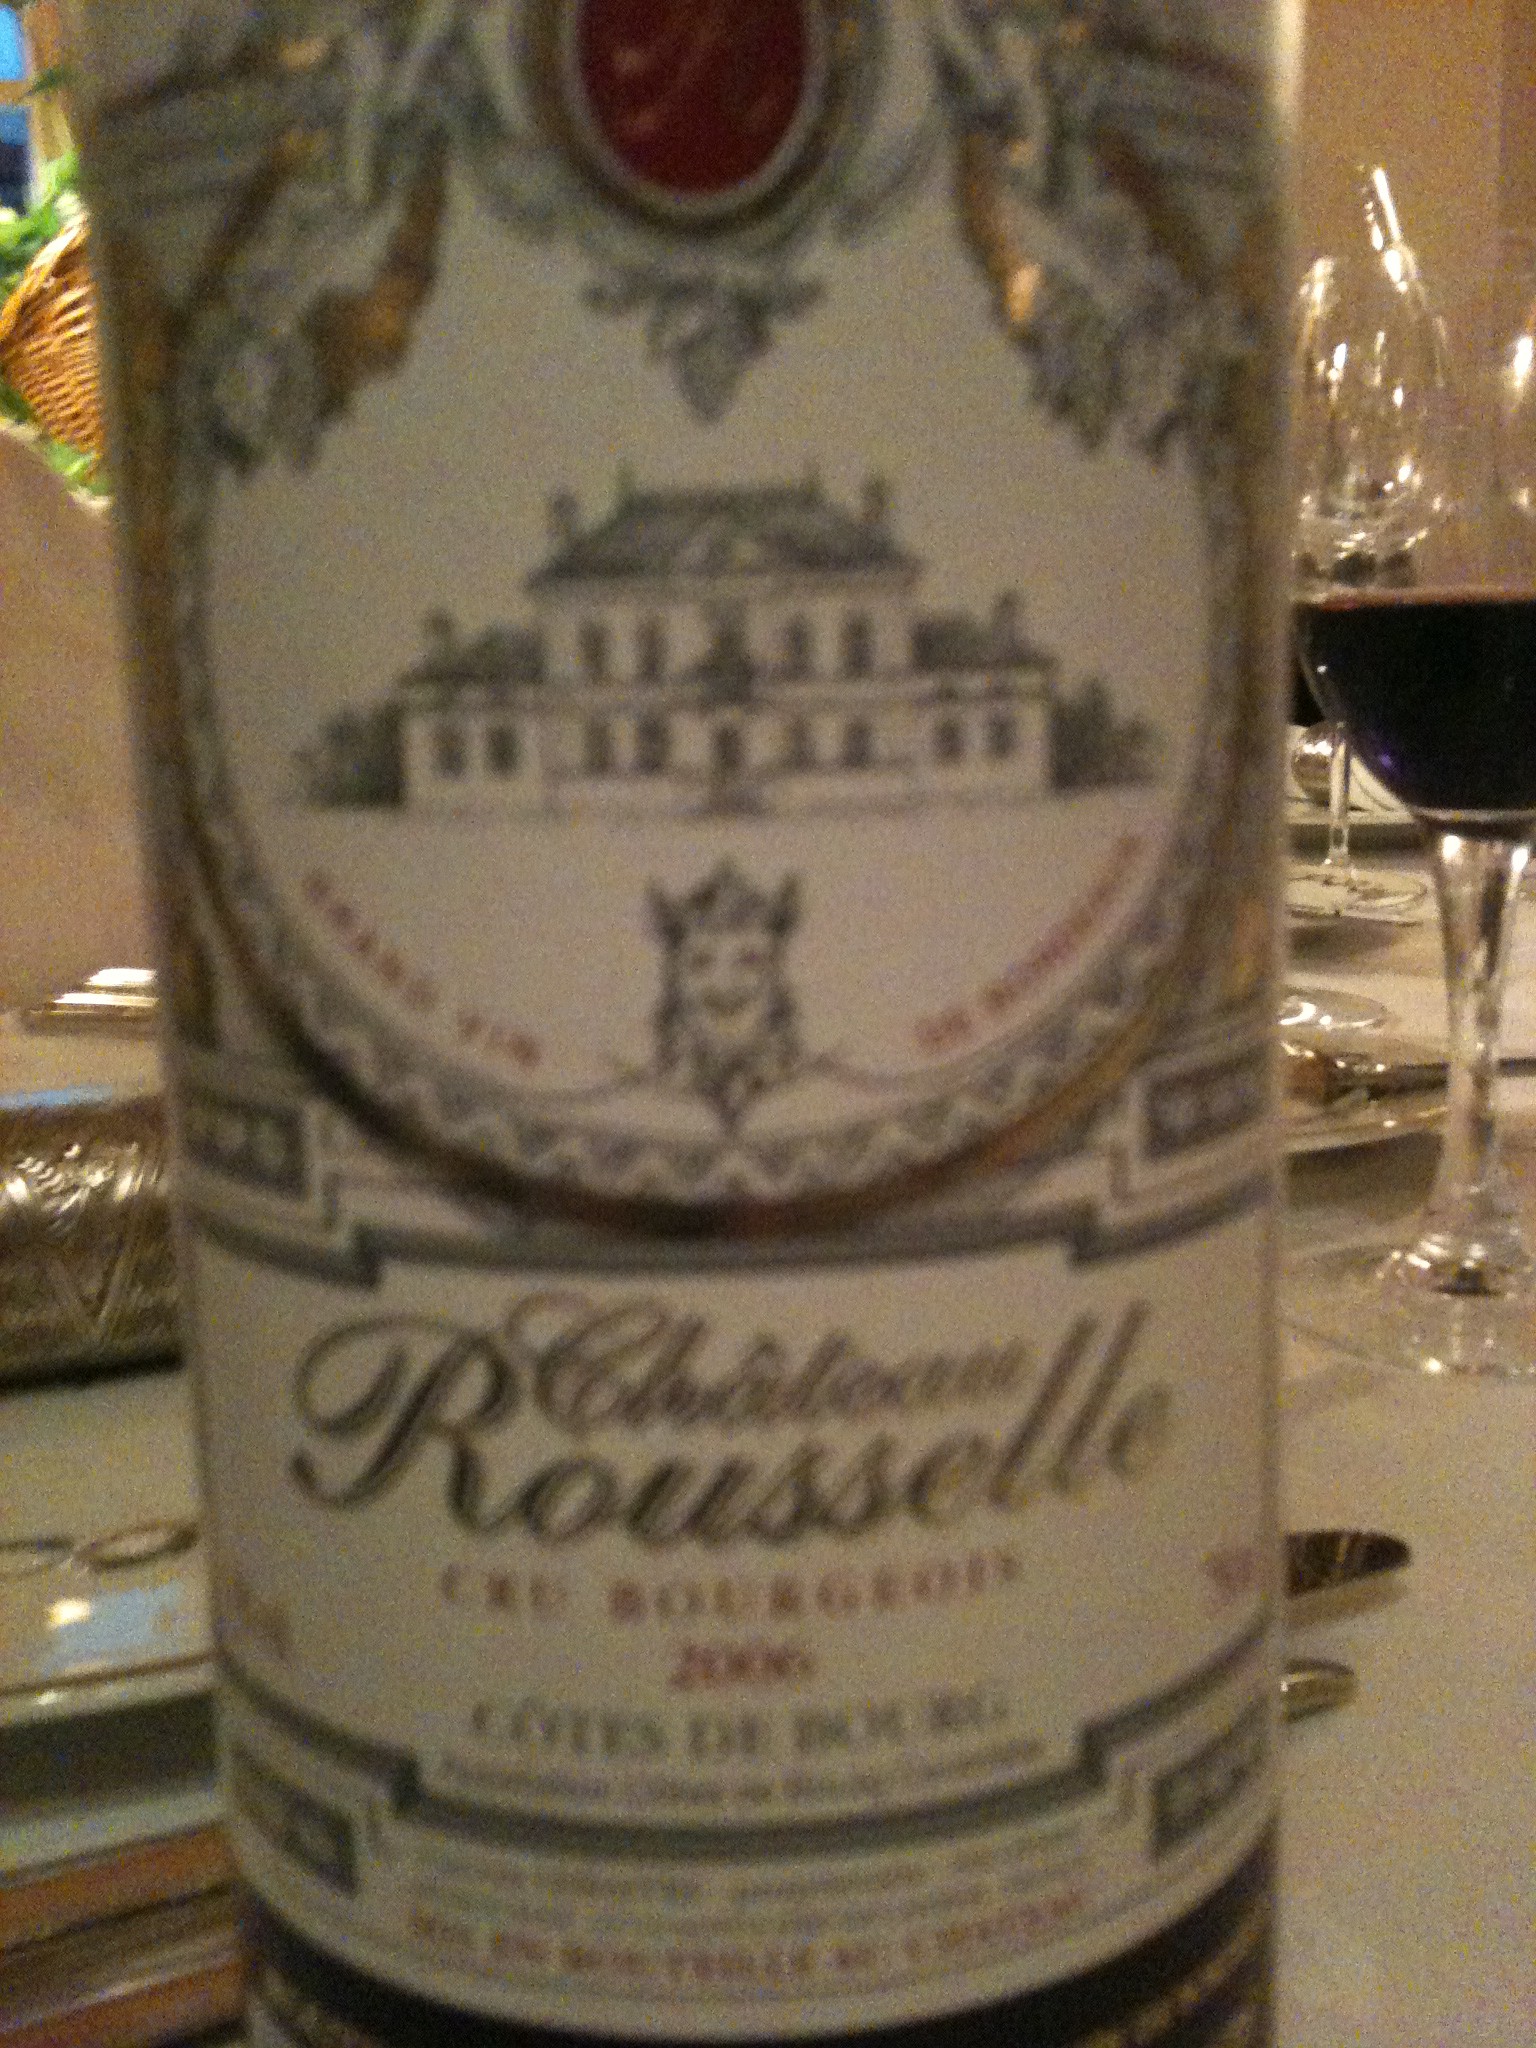 Château Rouselle, 2006